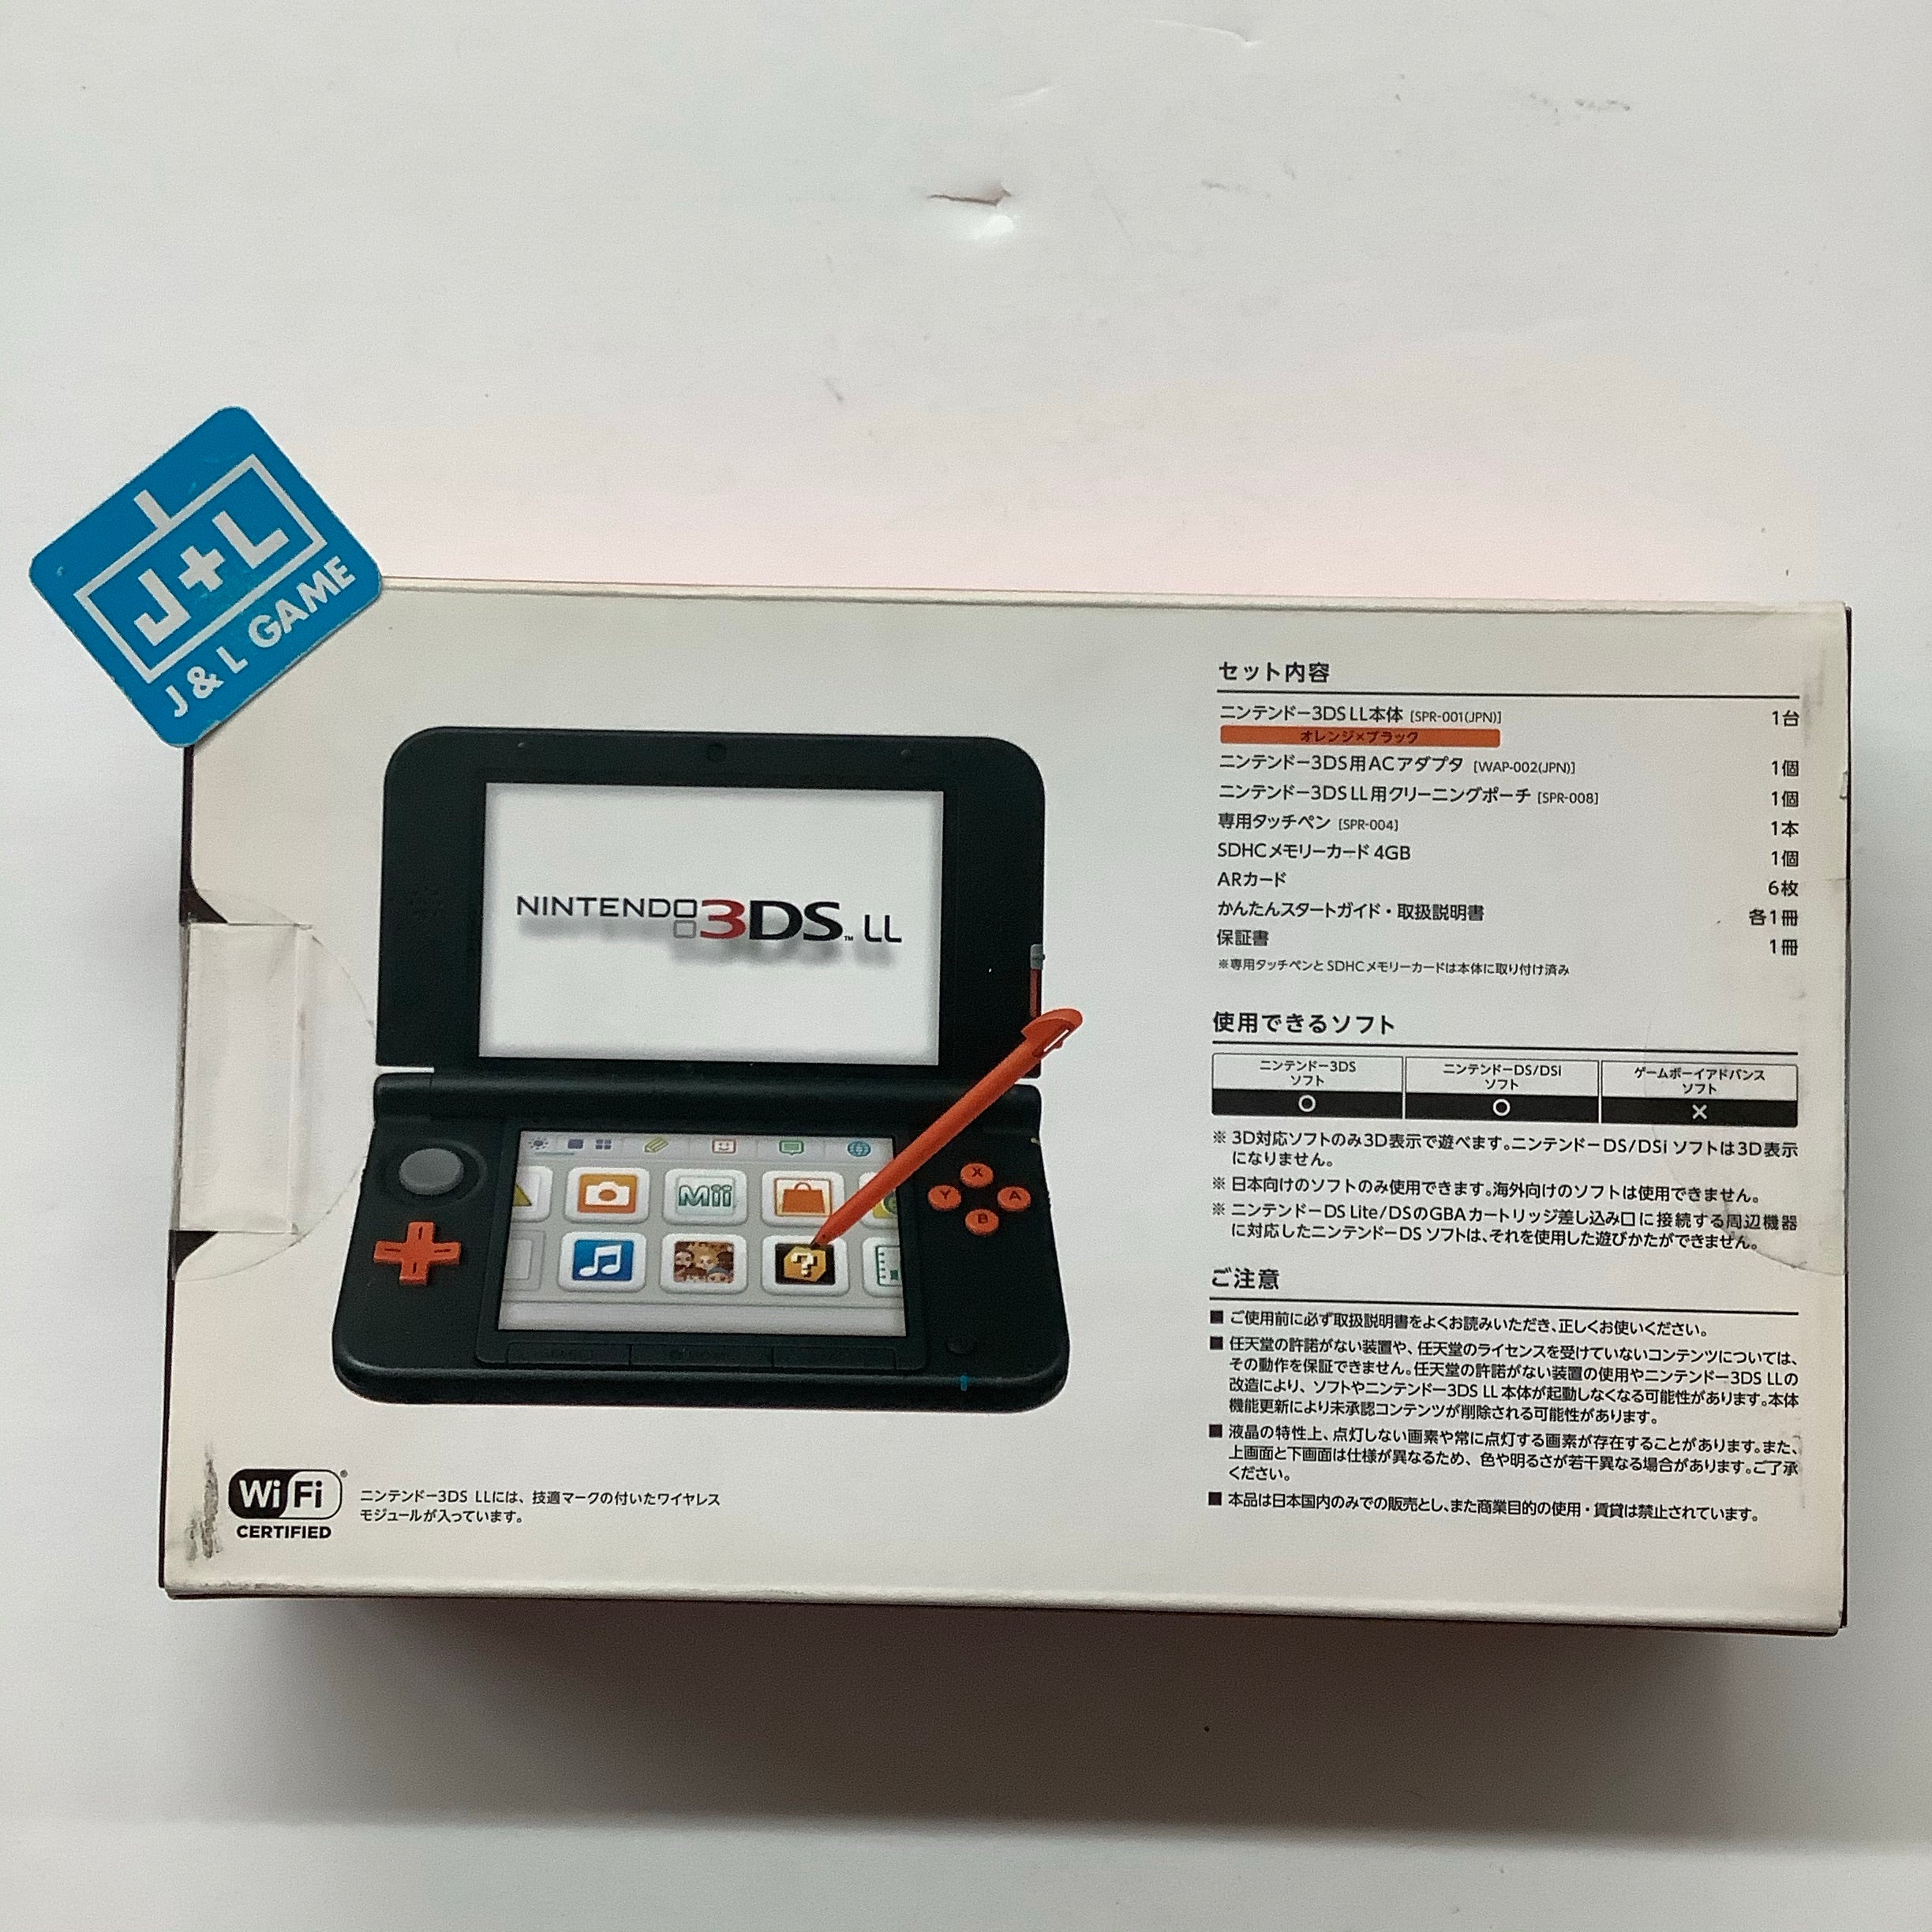 Nintendo 3DS LL Limited Pack Orange X Black - (3DS) Nintendo 3DS ( Japanese  Import )